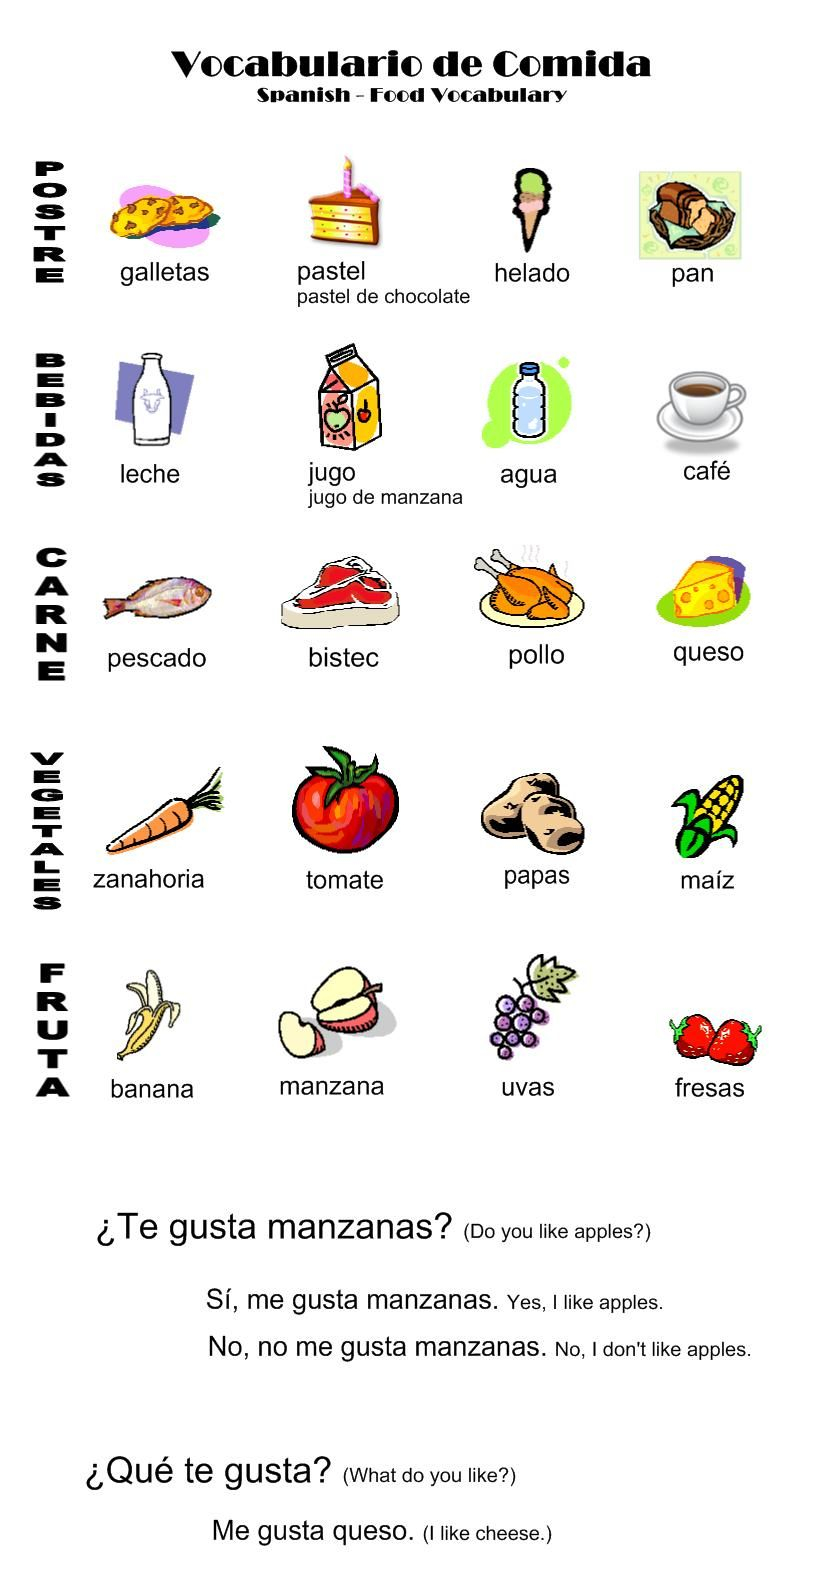 FL Explore Food Vocabulary Notes Learning Spanish Spanish Food